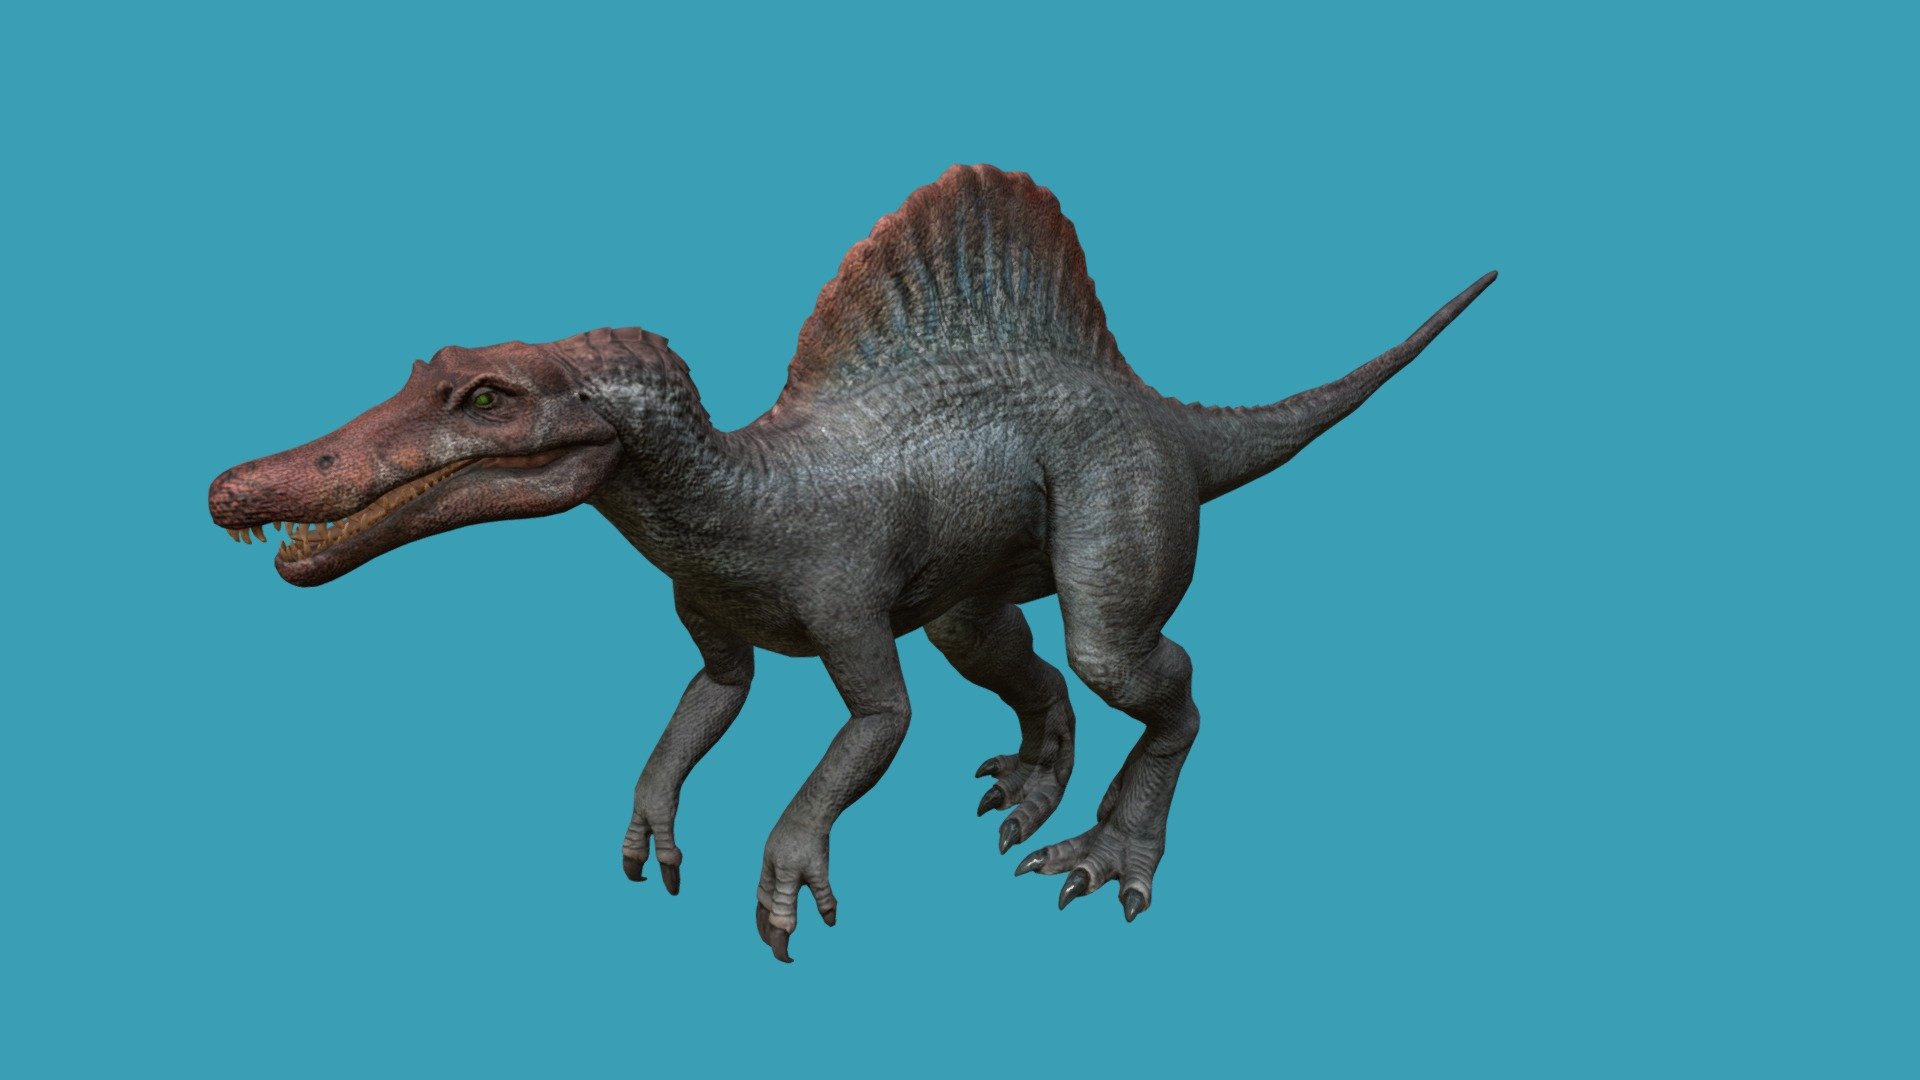 Simple Idle animation for this spinosaurus
&ldquo;Jurassic Park 3 - Spinosaurus